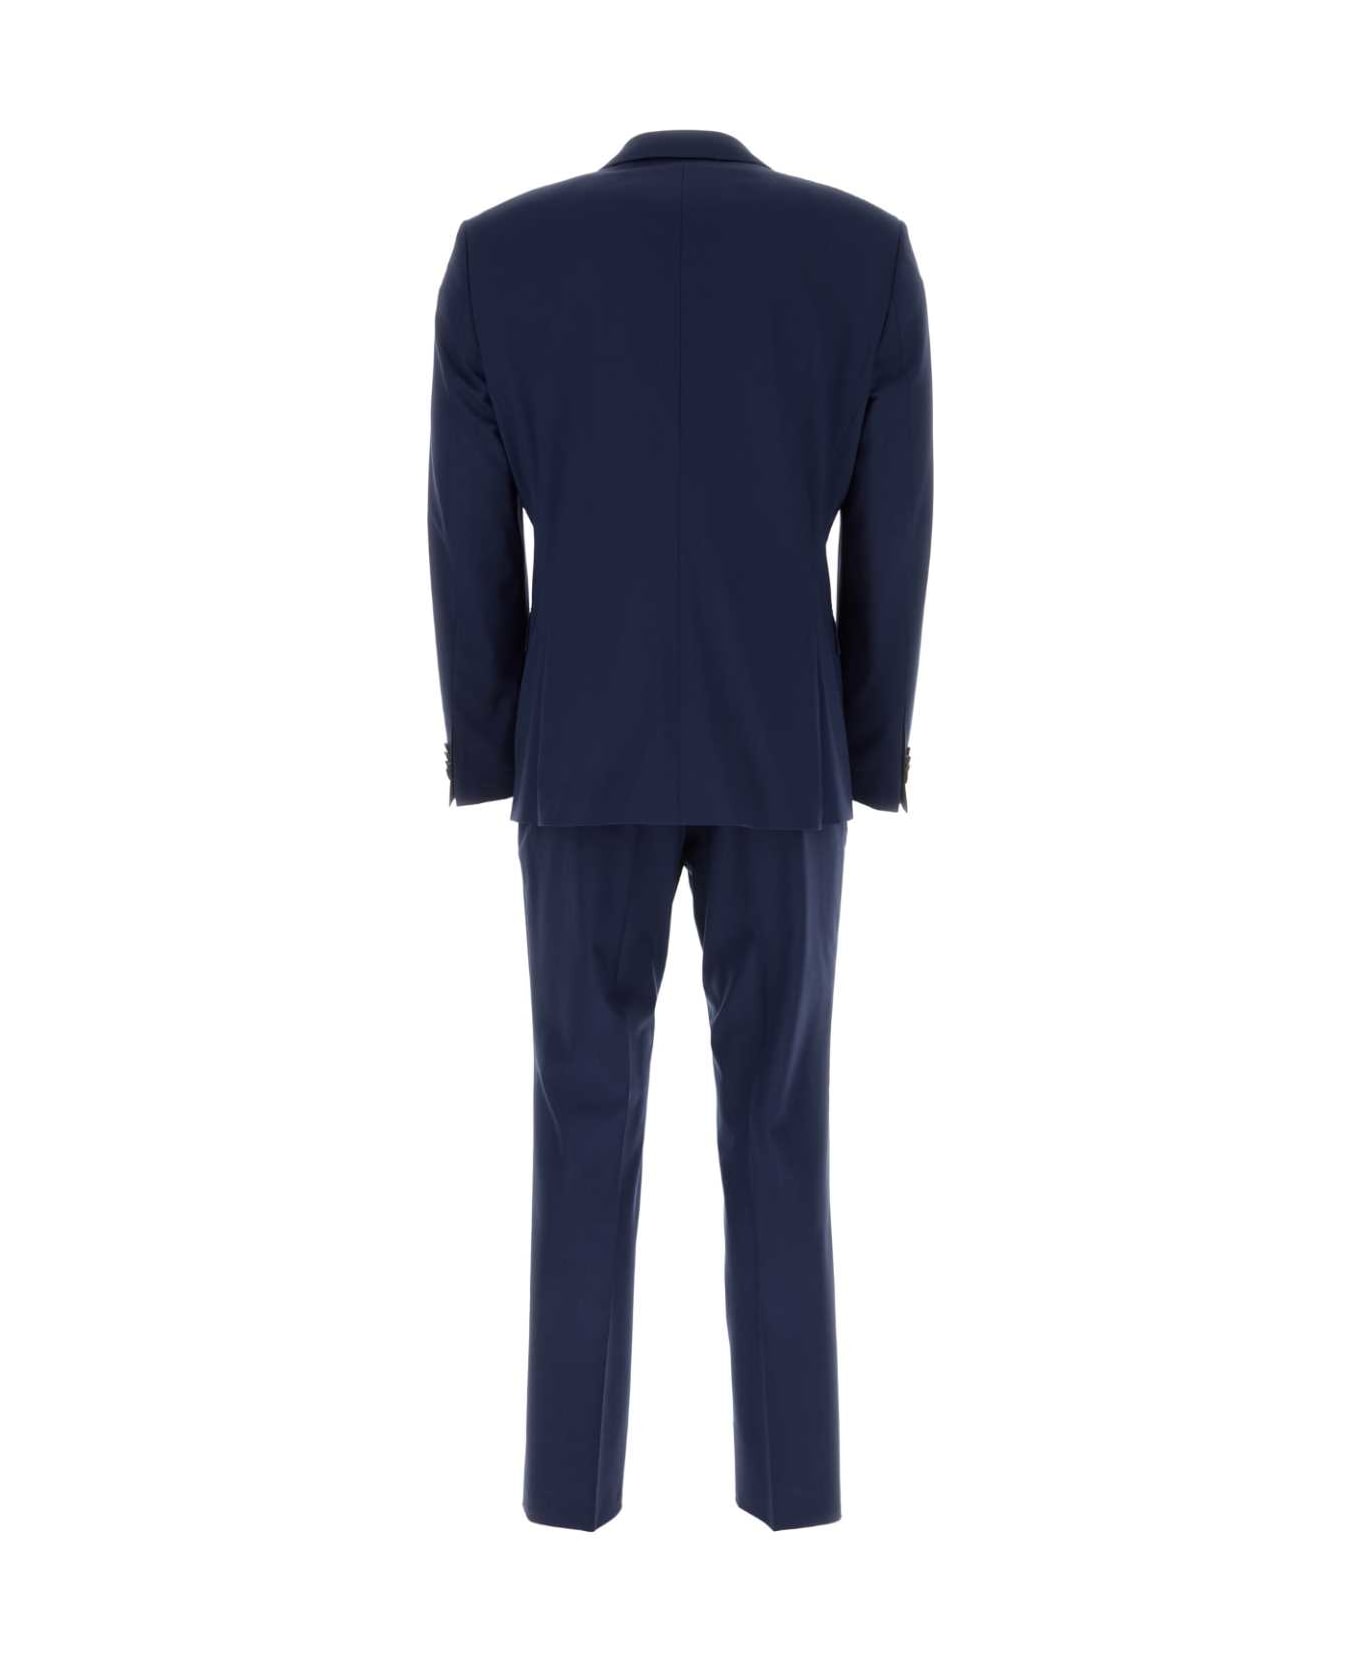 Hugo Boss Blue Stretch Wool Suit - OPENBLUE スーツ